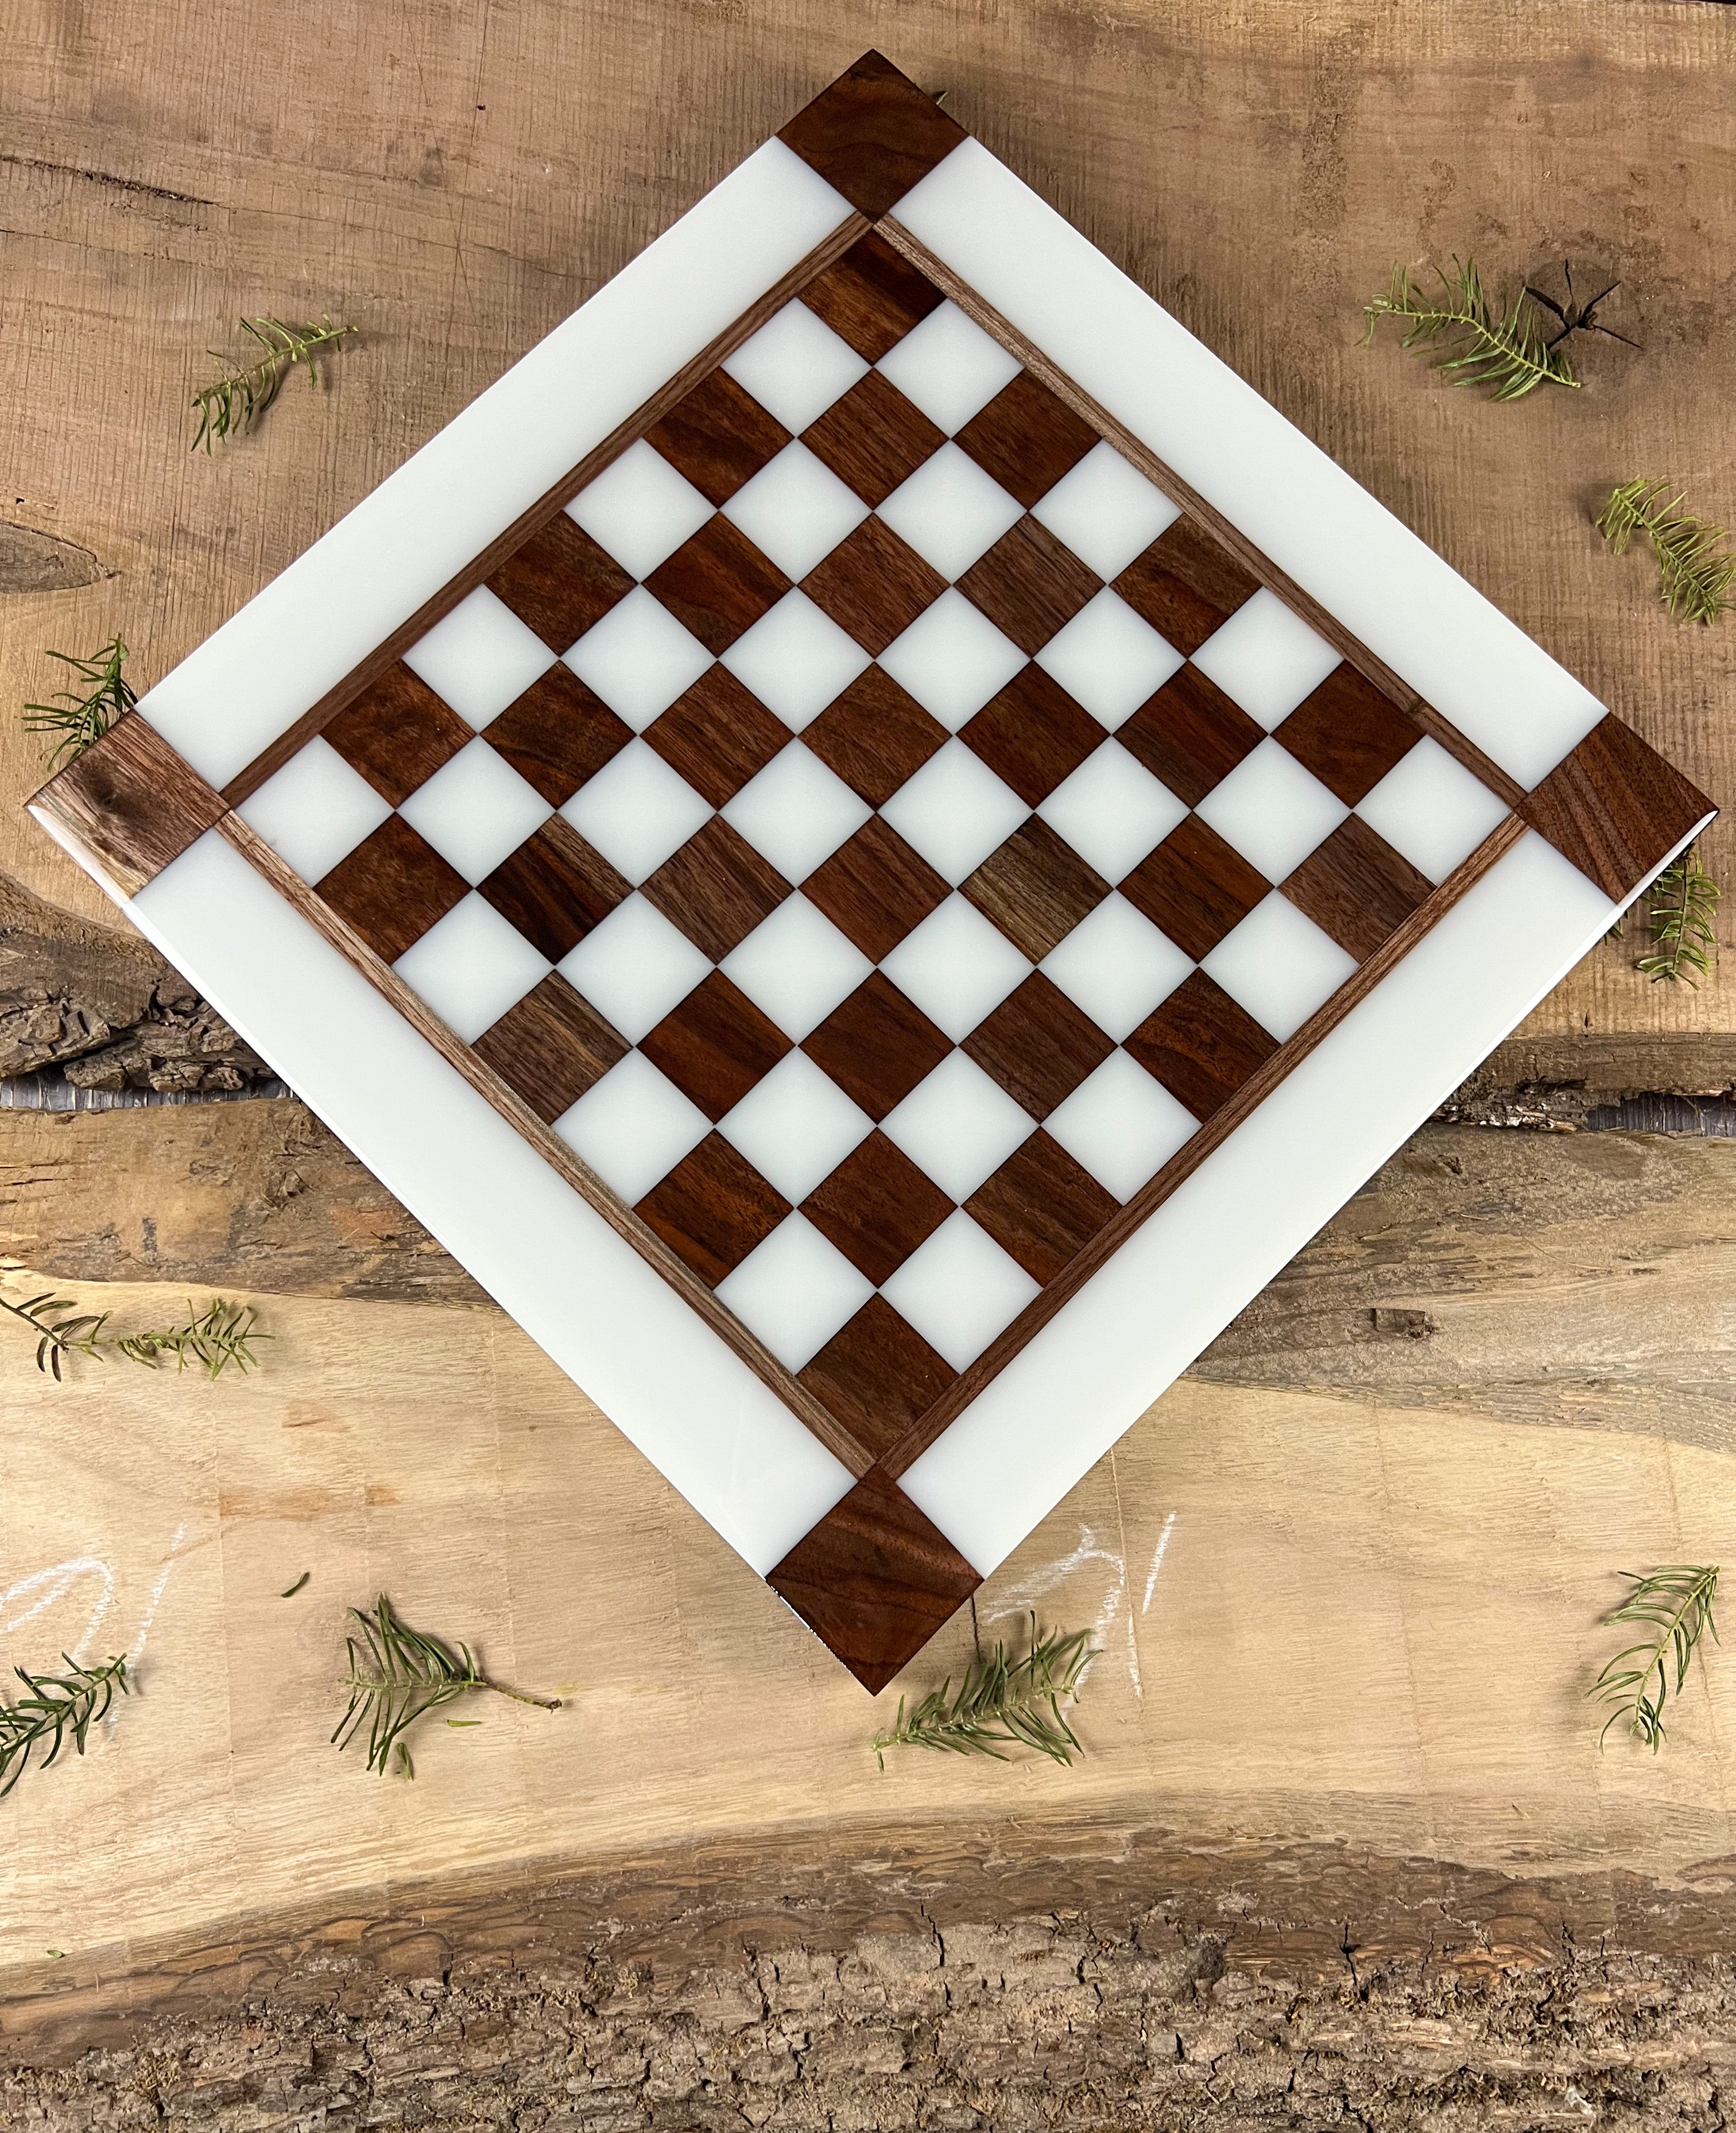 Milky White Walnut Chess Board (With Border)